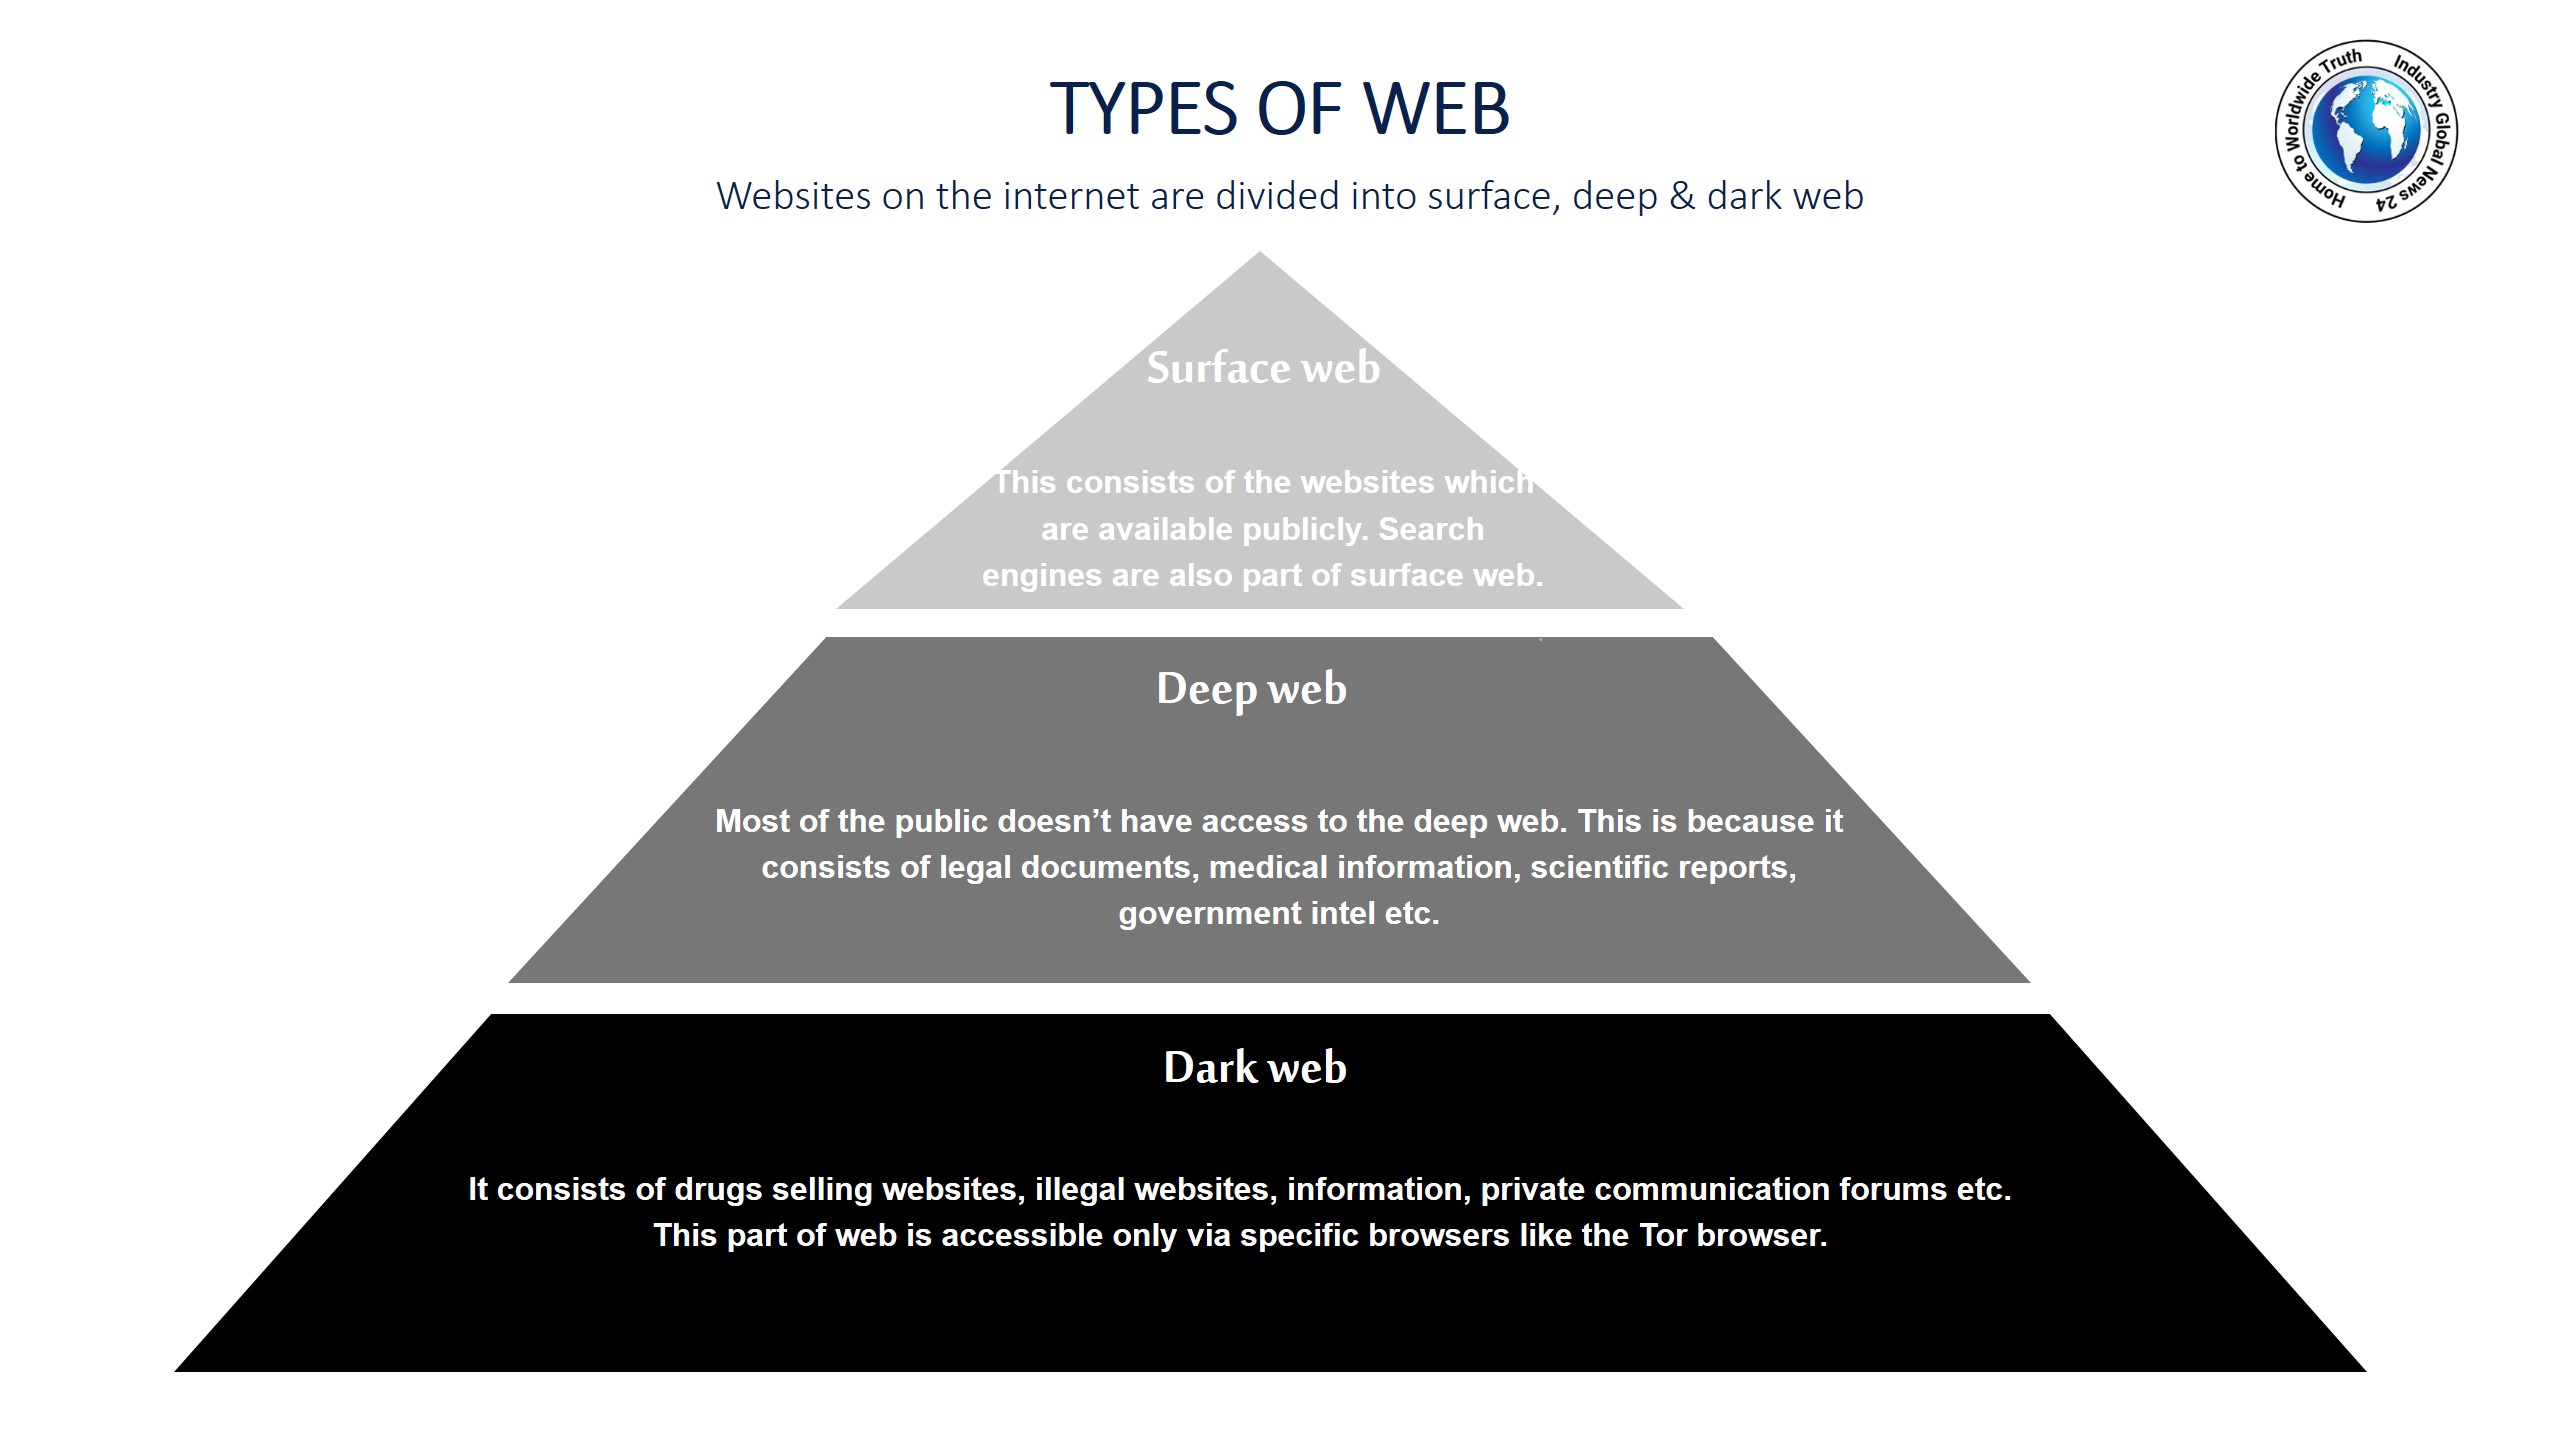 Types of web